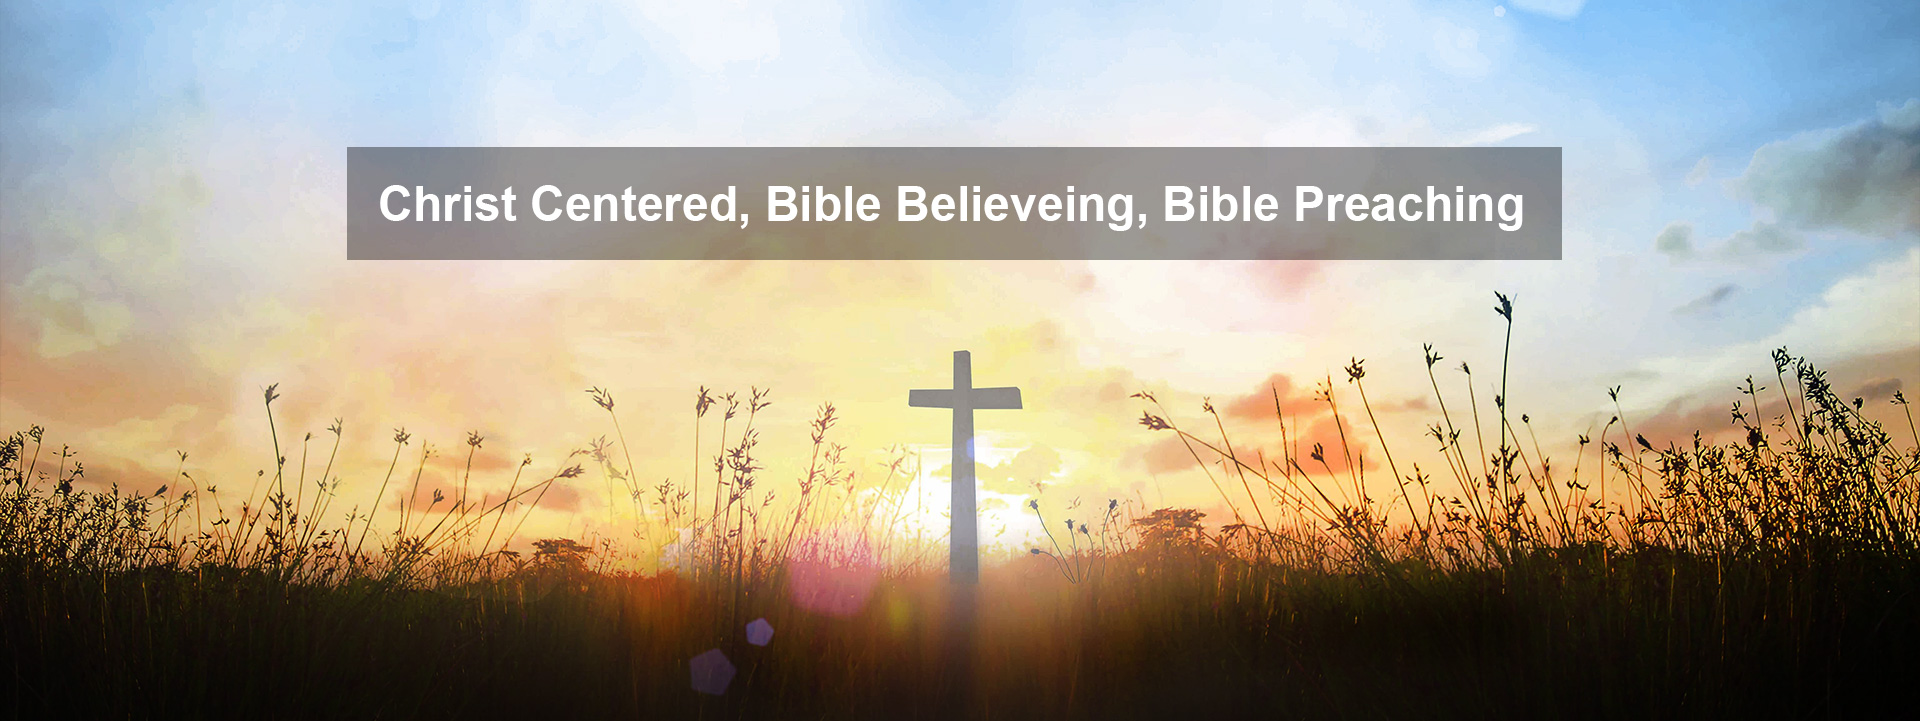 Christ Centered, Bible Believeing, Bible Preaching